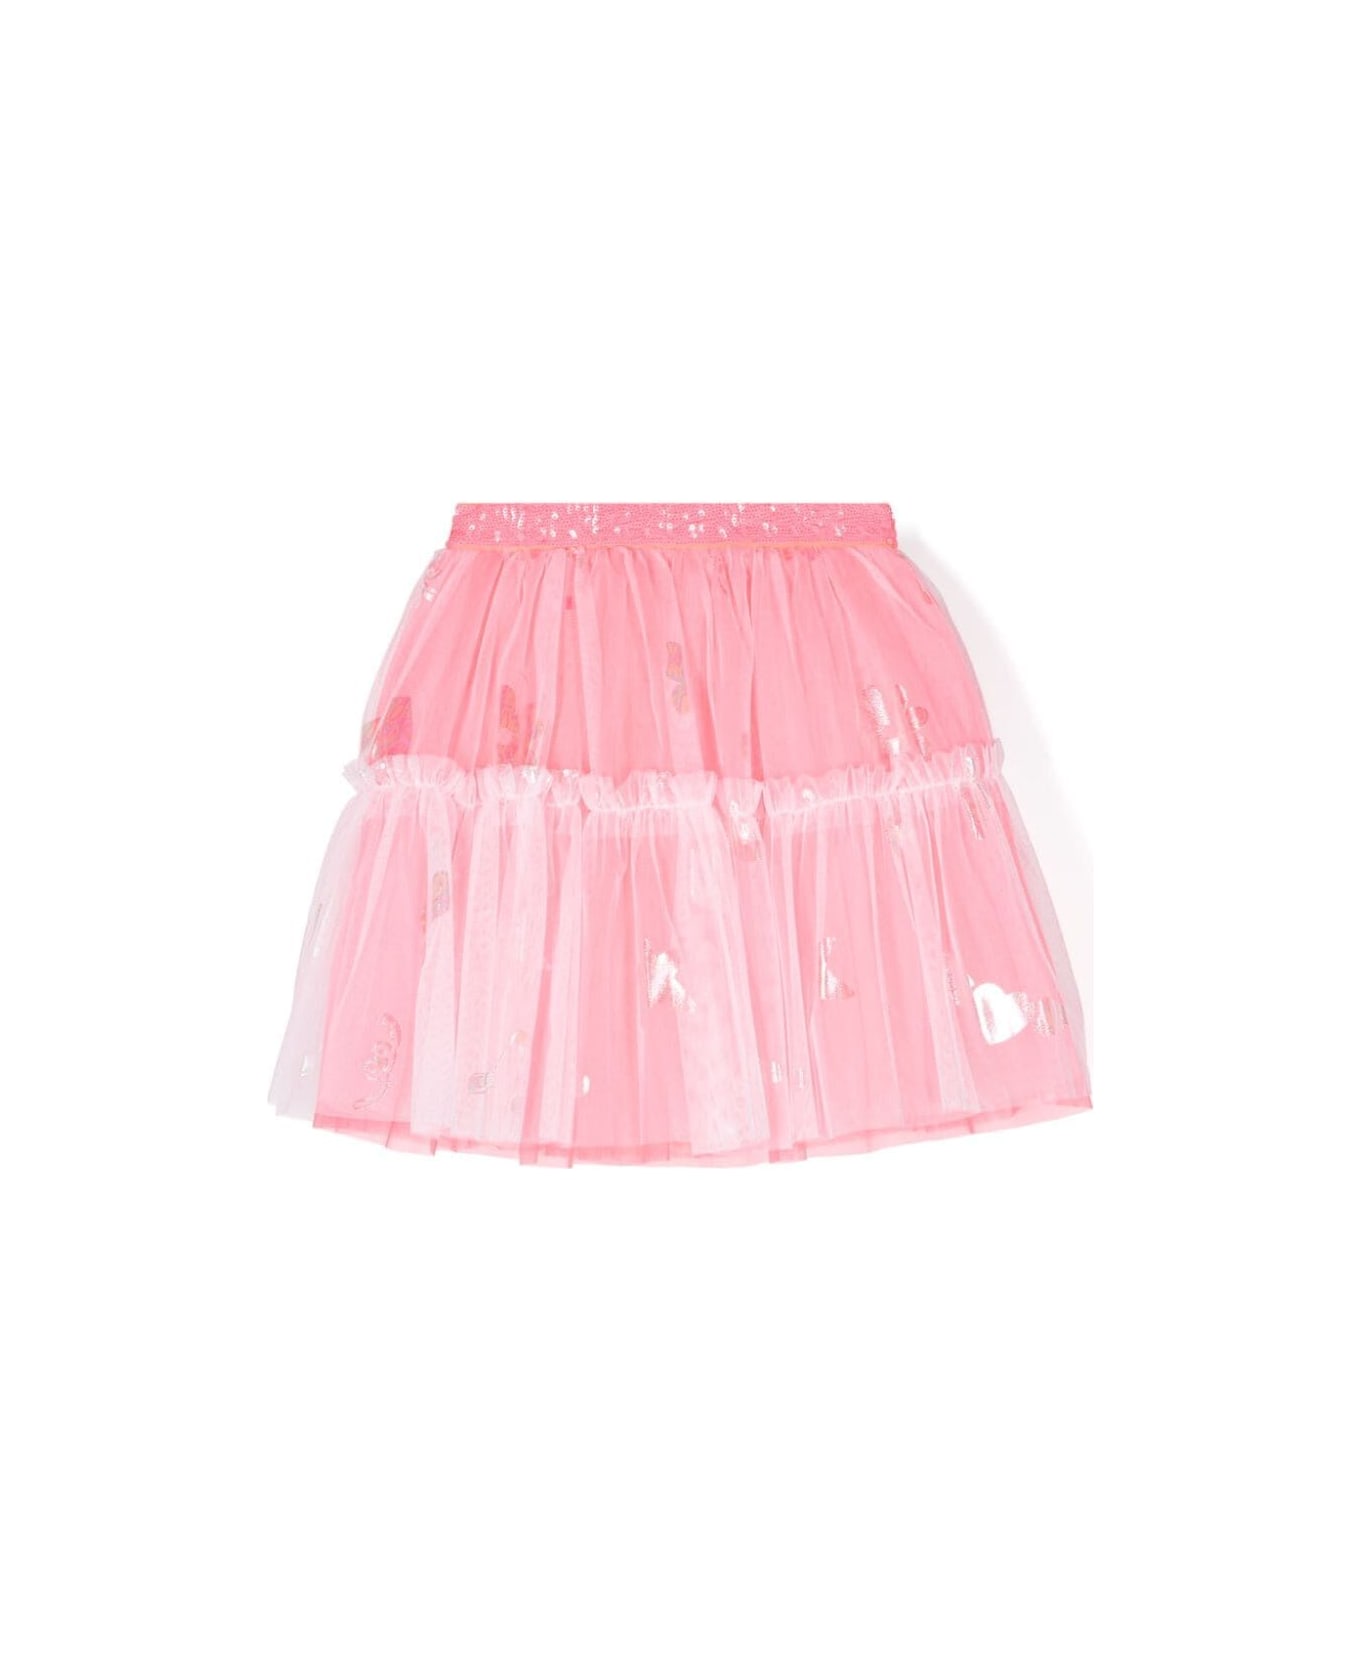 Billieblush Petticoat - S Pink Pale